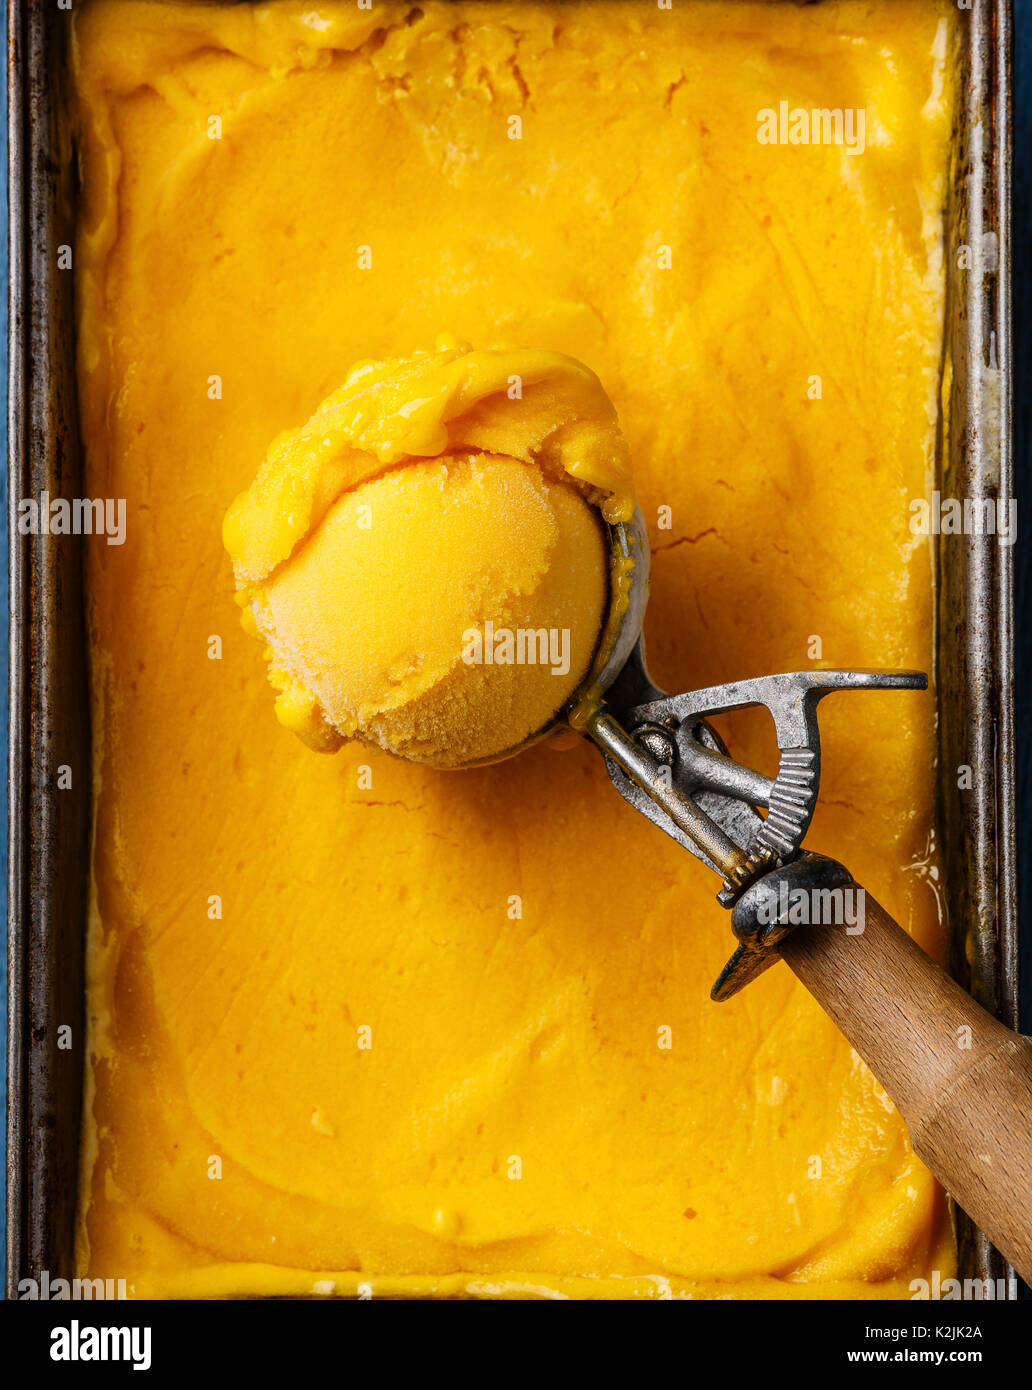 https://c8.alamy.com/comp/K2JK2A/sorbet-mango-ice-cream-ball-in-scoop-close-up-K2JK2A.jpg